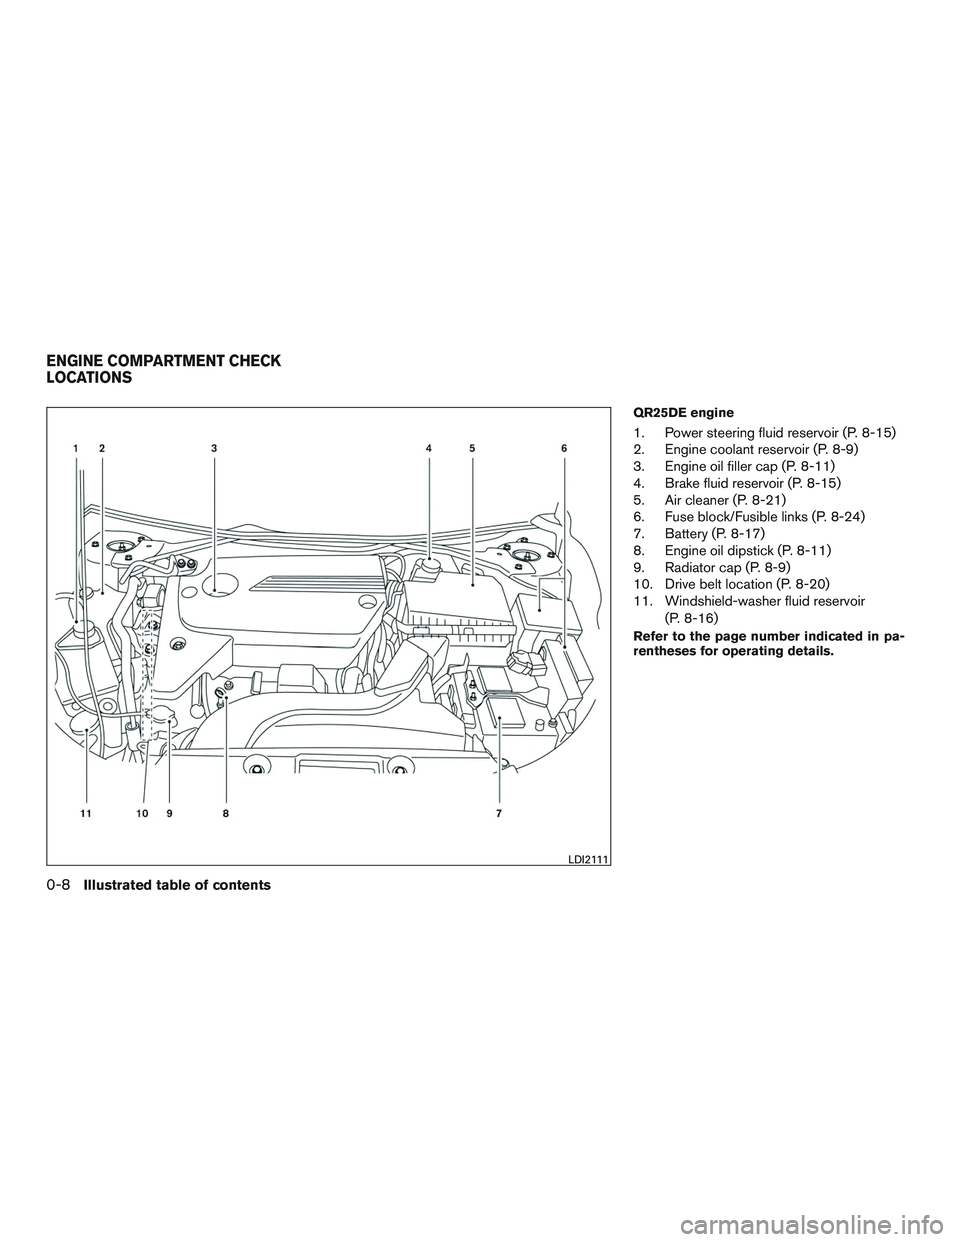 NISSAN ALTIMA SEDAN 2015 User Guide QR25DE engine
1. Power steering fluid reservoir (P. 8-15)
2. Engine coolant reservoir (P. 8-9)
3. Engine oil filler cap (P. 8-11)
4. Brake fluid reservoir (P. 8-15)
5. Air cleaner (P. 8-21)
6. Fuse bl